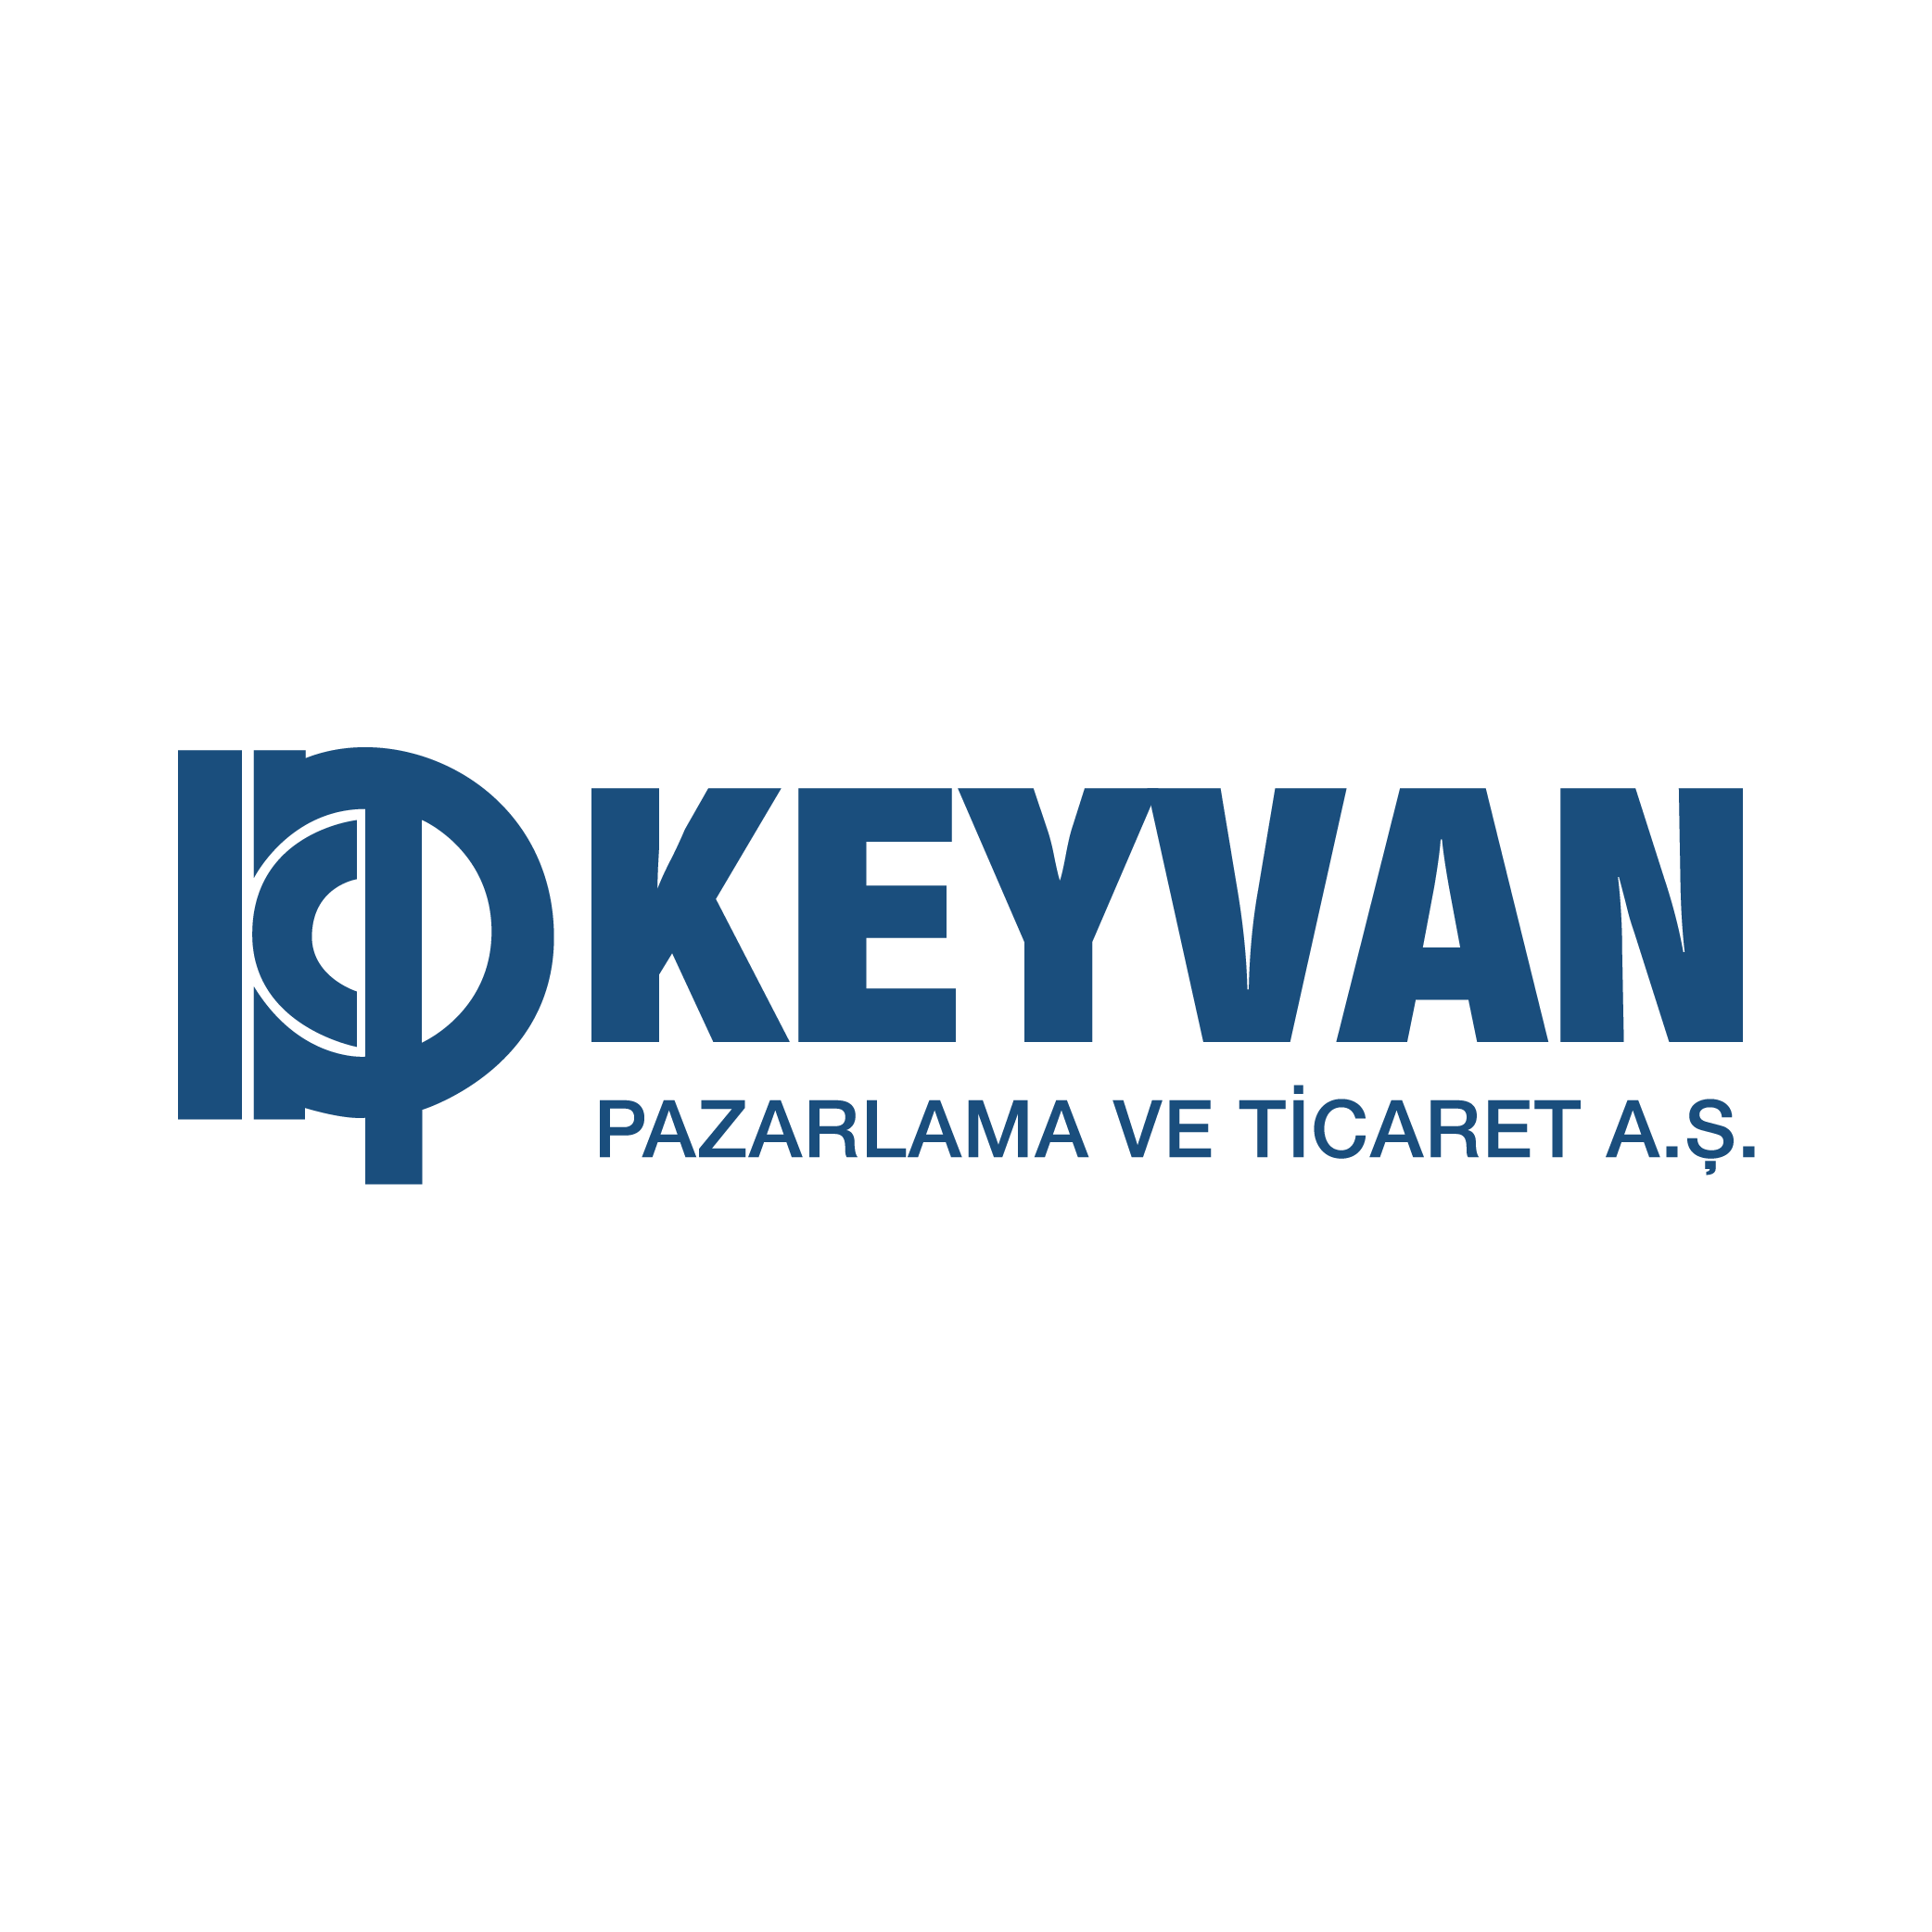 Keyvan_Pazarlama